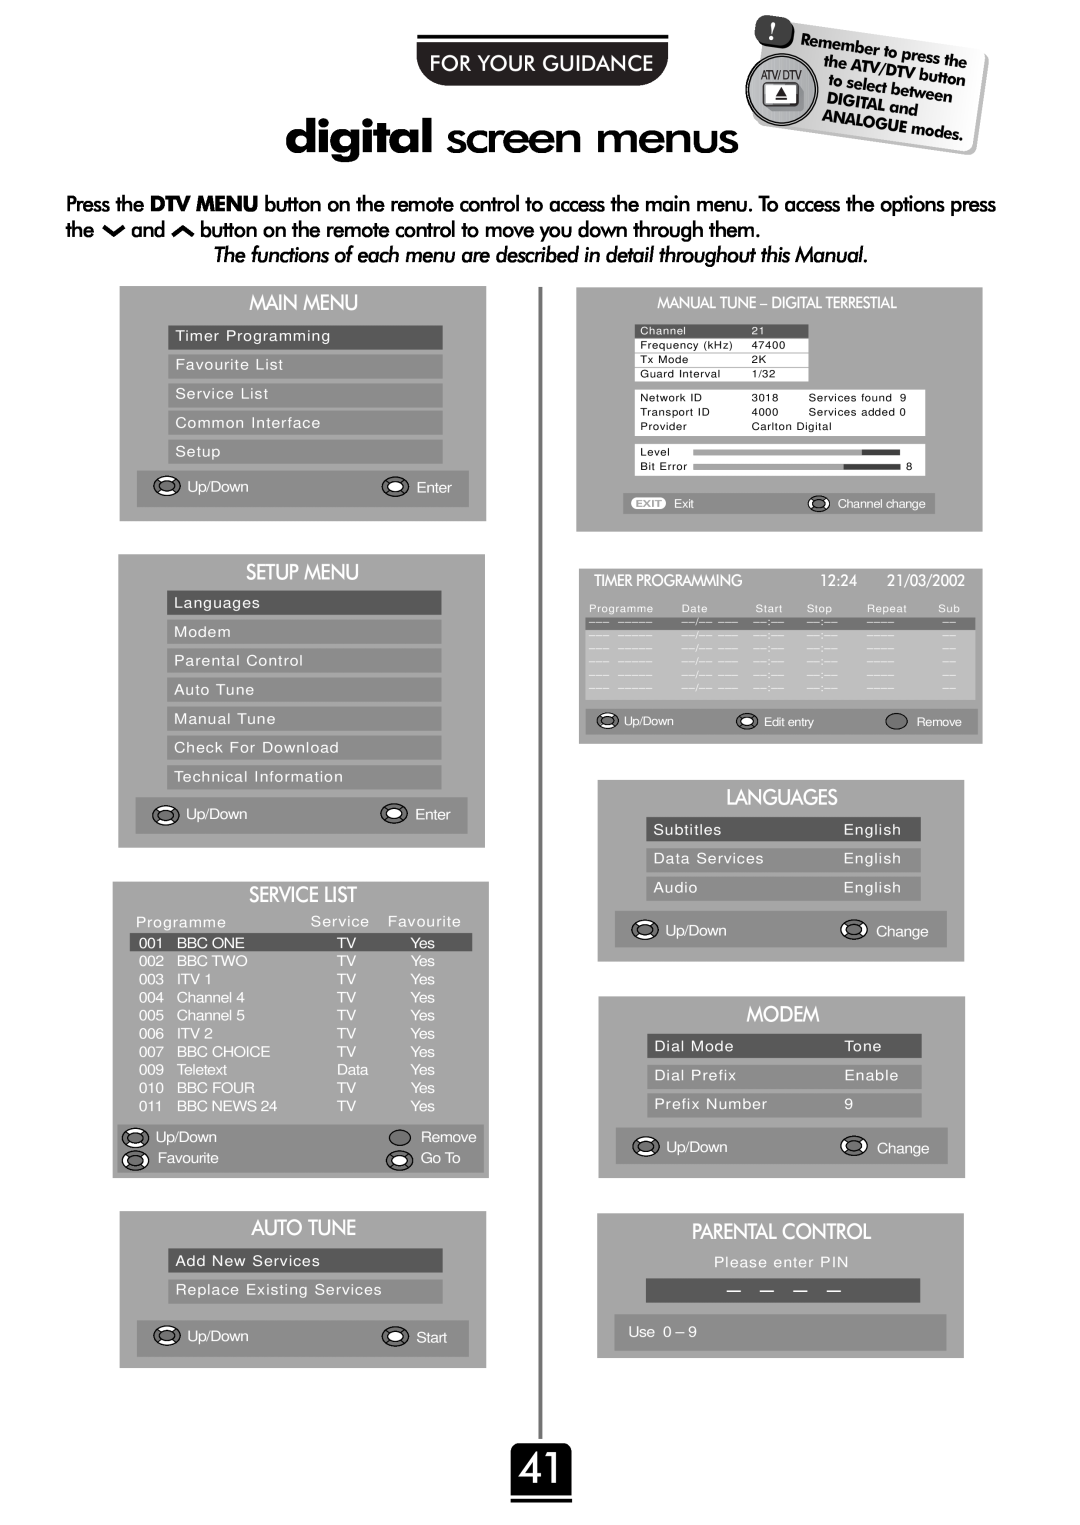 Toshiba 32ZT29B digital screen menus, For Your Guidance, Main Menu, Setup Menu, Service List, Auto Tune, Languages, Modem 